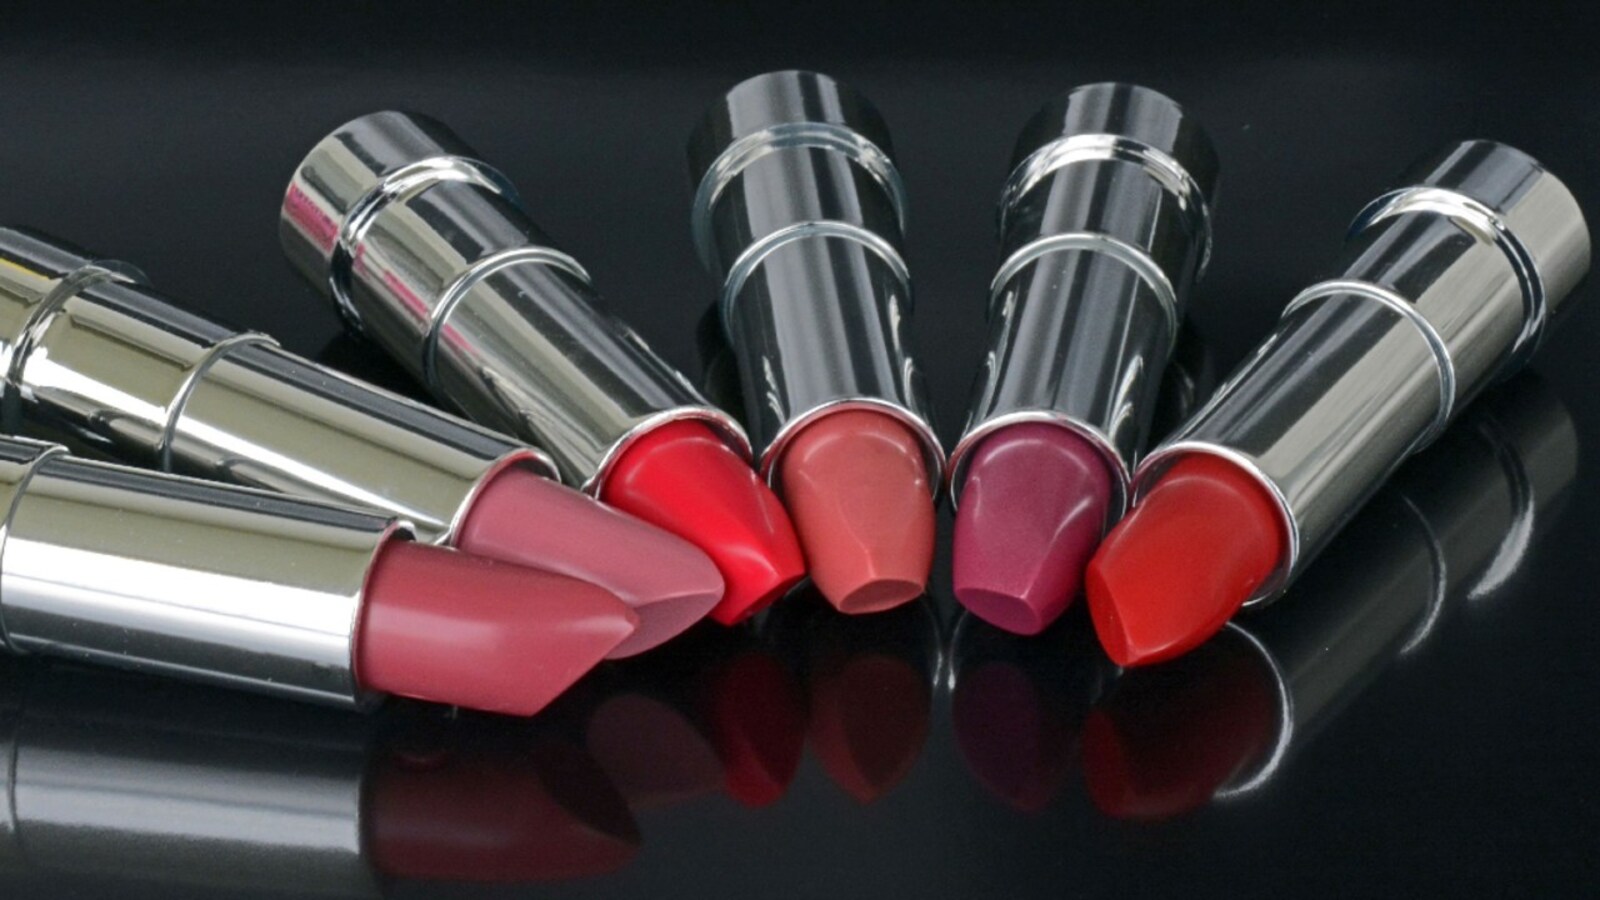 Buy Louis Vuitton Lipstick Online In India -  India